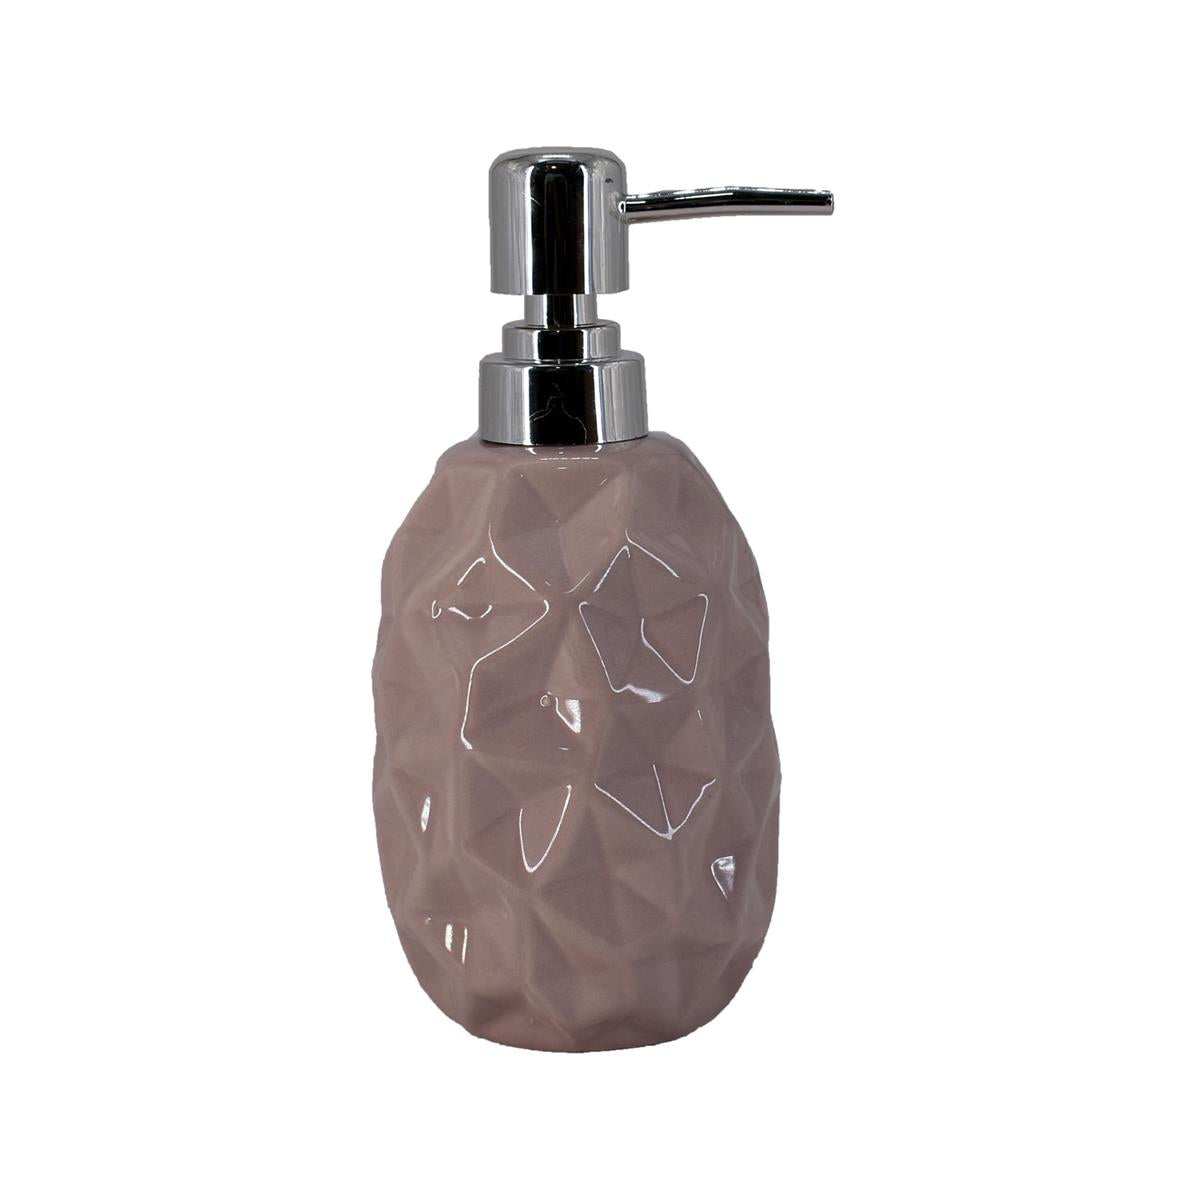 Ceramic Soap Dispenser handwash Pump for Bathroom, Set of 1, Brown (7622)